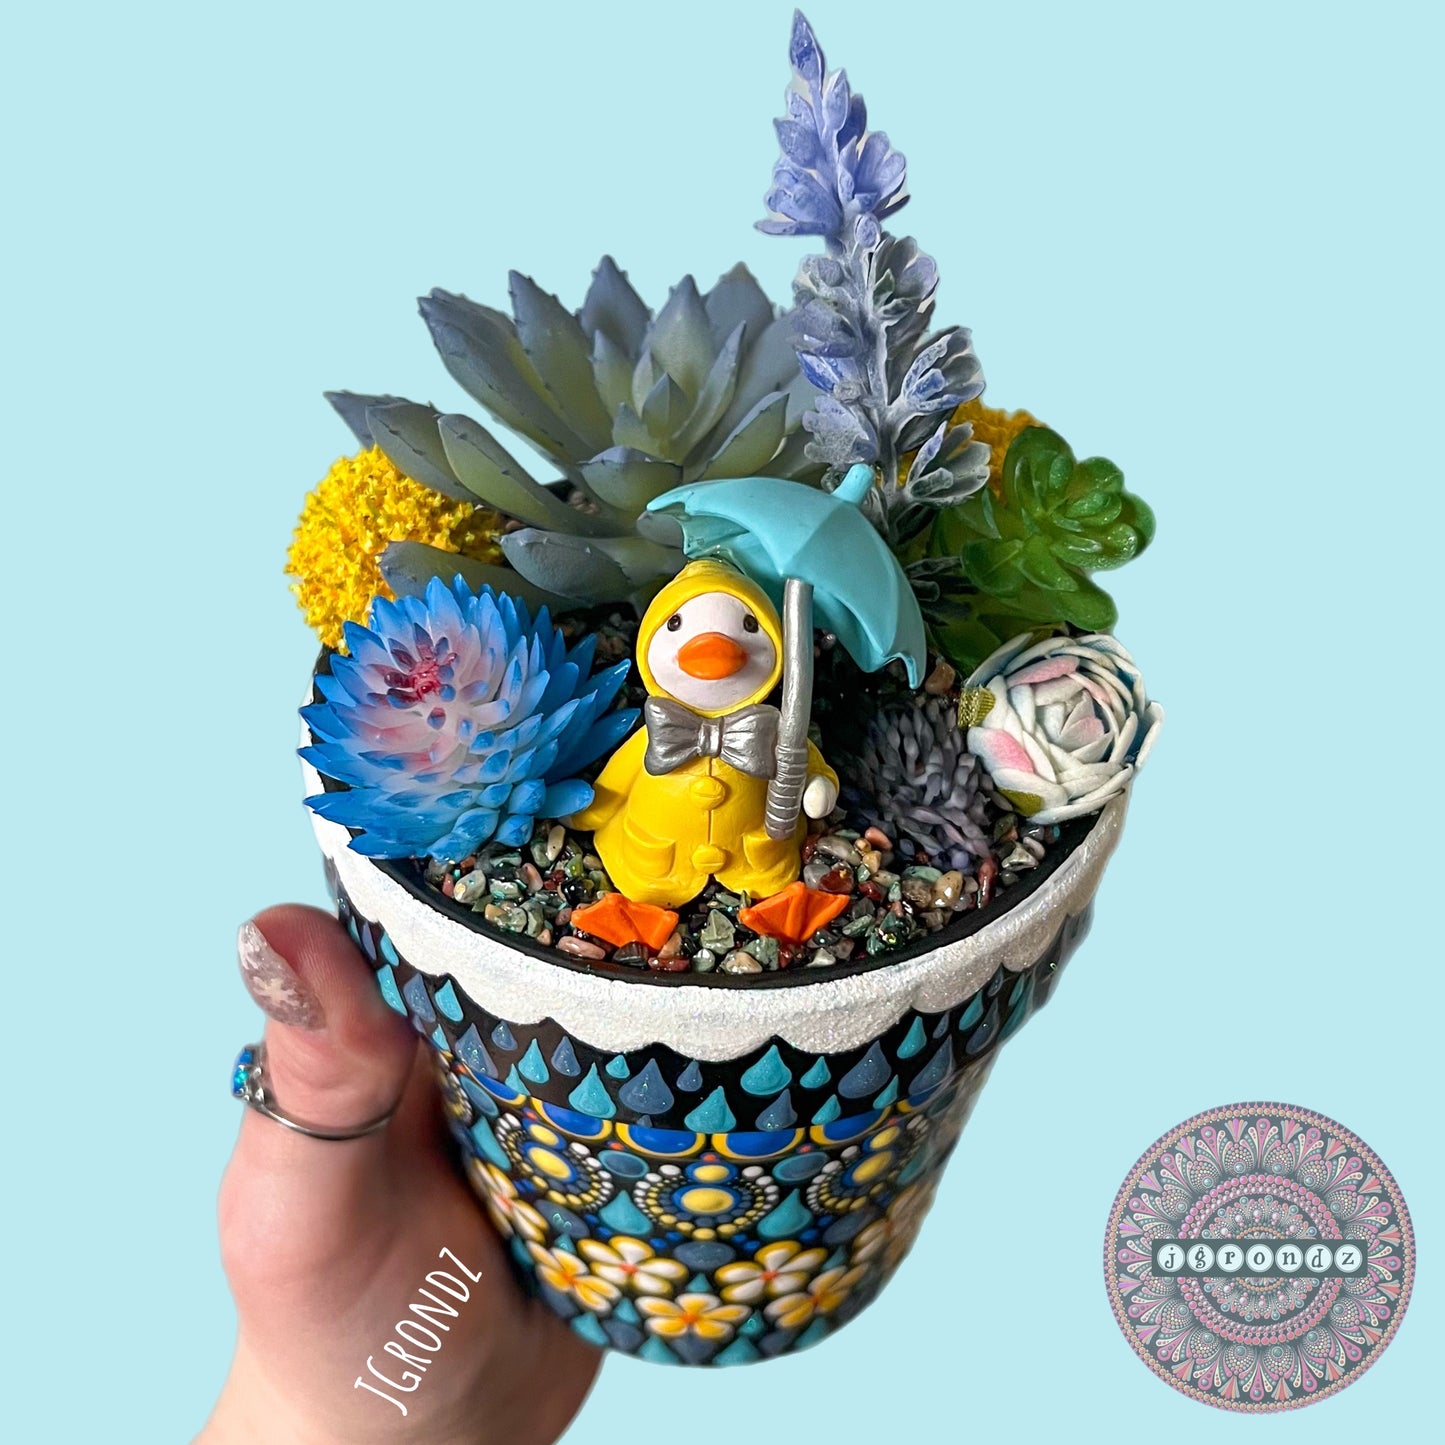 XXL Hoppy Pot - Spring/Easter Painted Succulent Pot